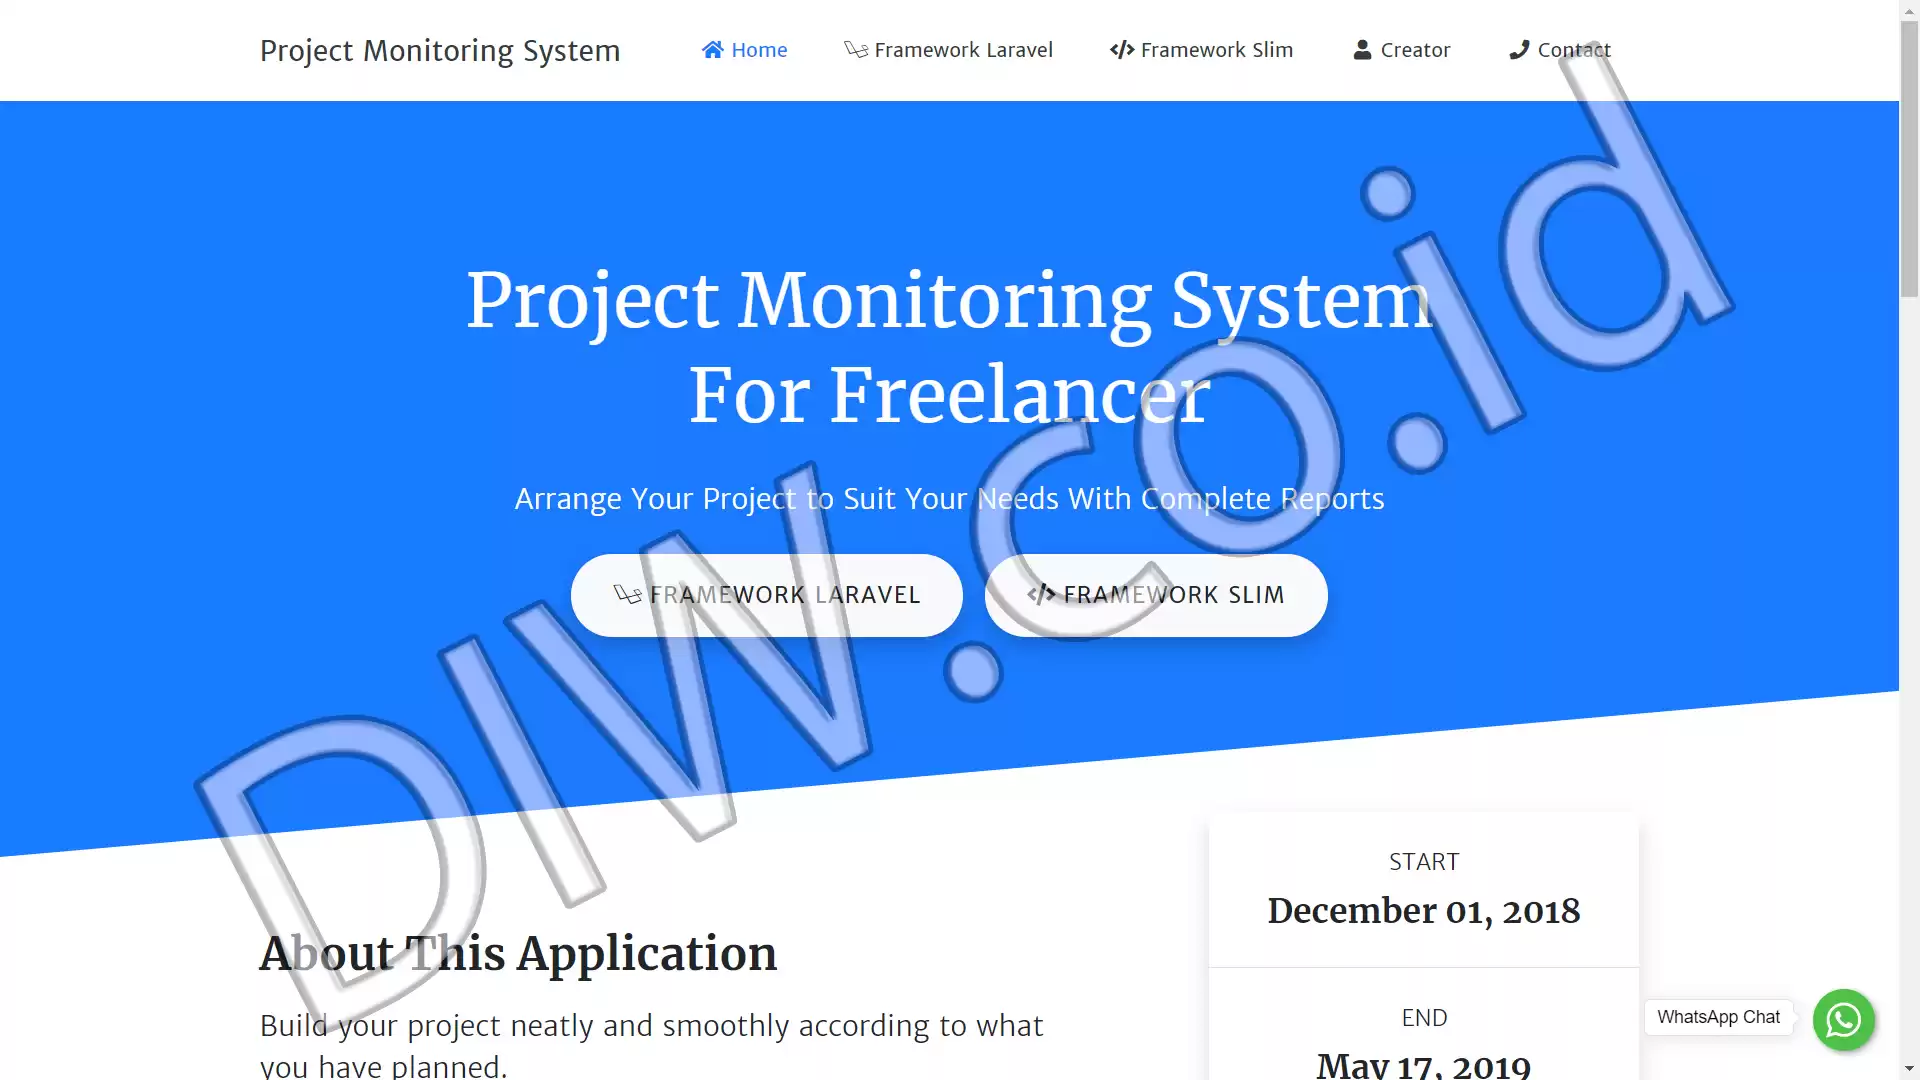 Portfolio - Project Monitoring - DIW.co.id (Digital In Website) Jasa Pembuatan Website dan Program Skripsi